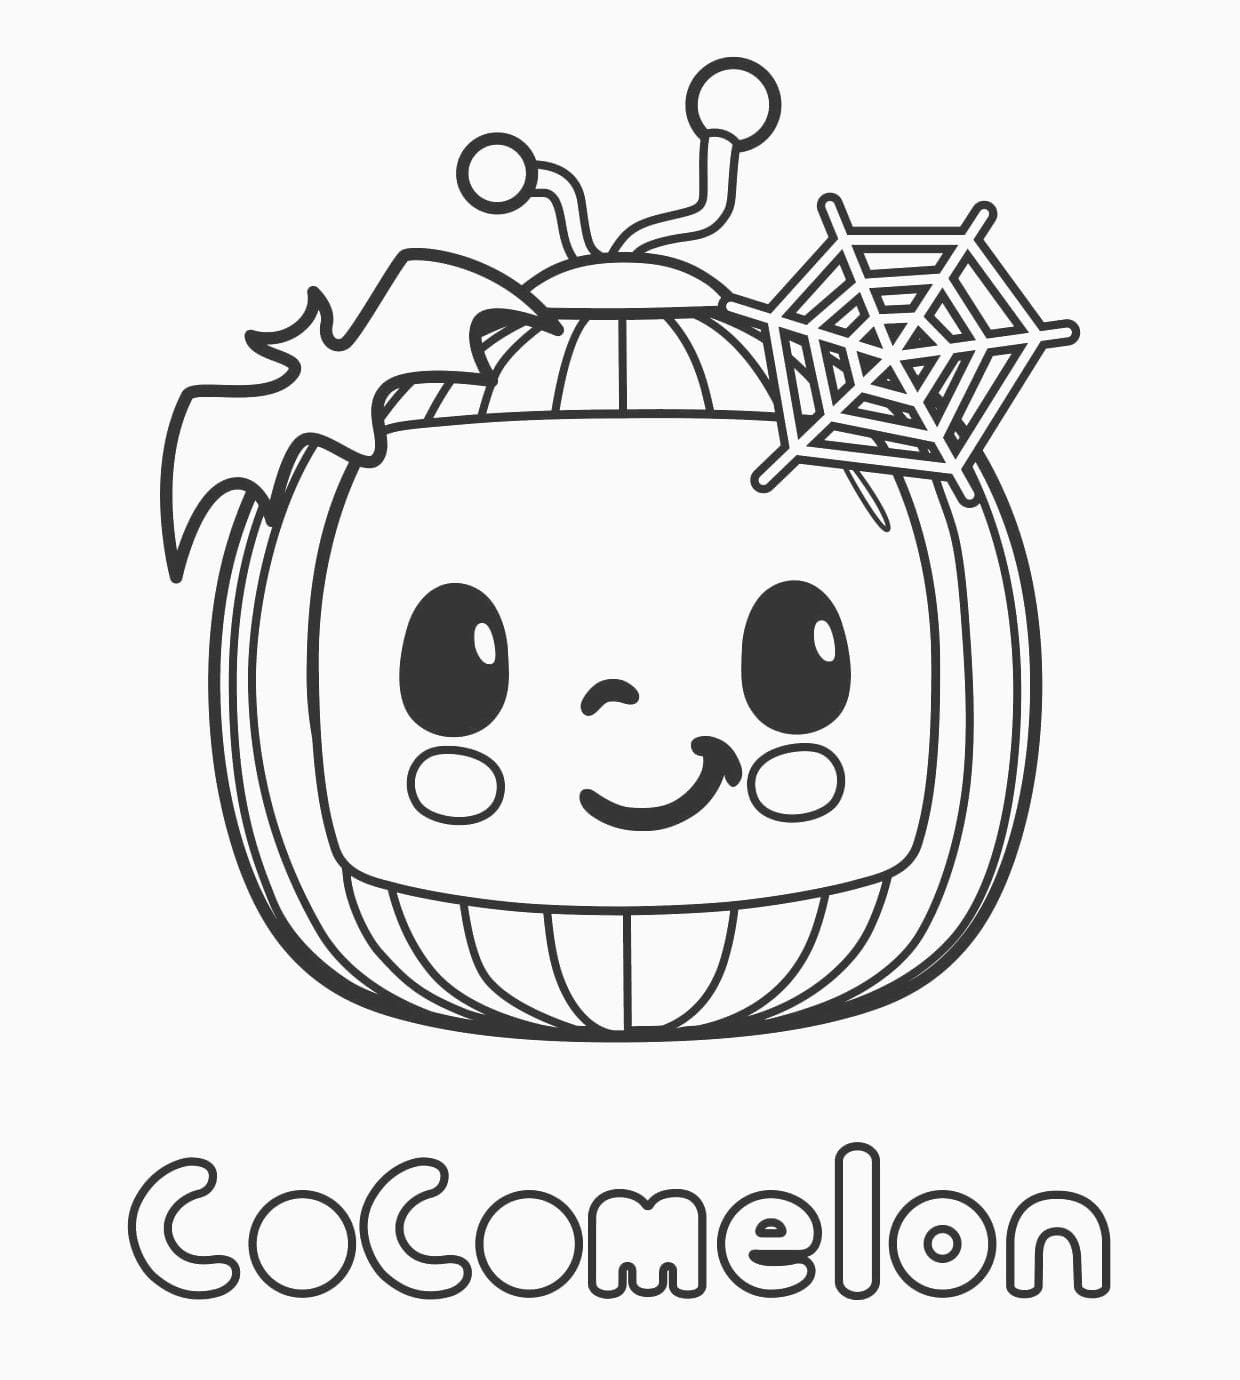 Cocomelon coloring page.